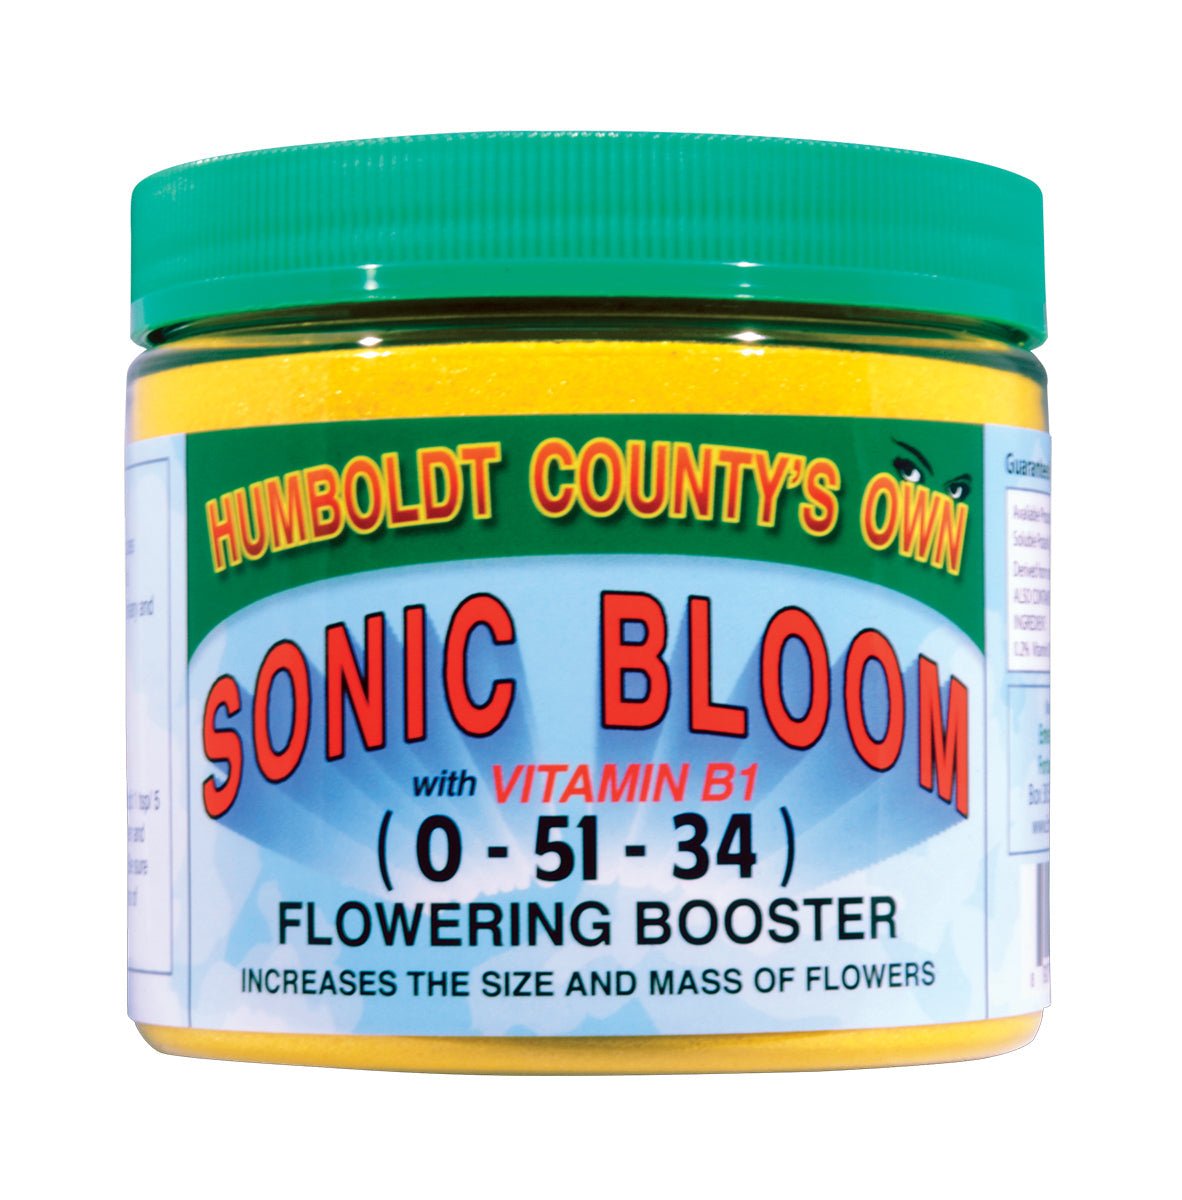 Humboldt County's Own Sonic Bloom - 815 Gardens